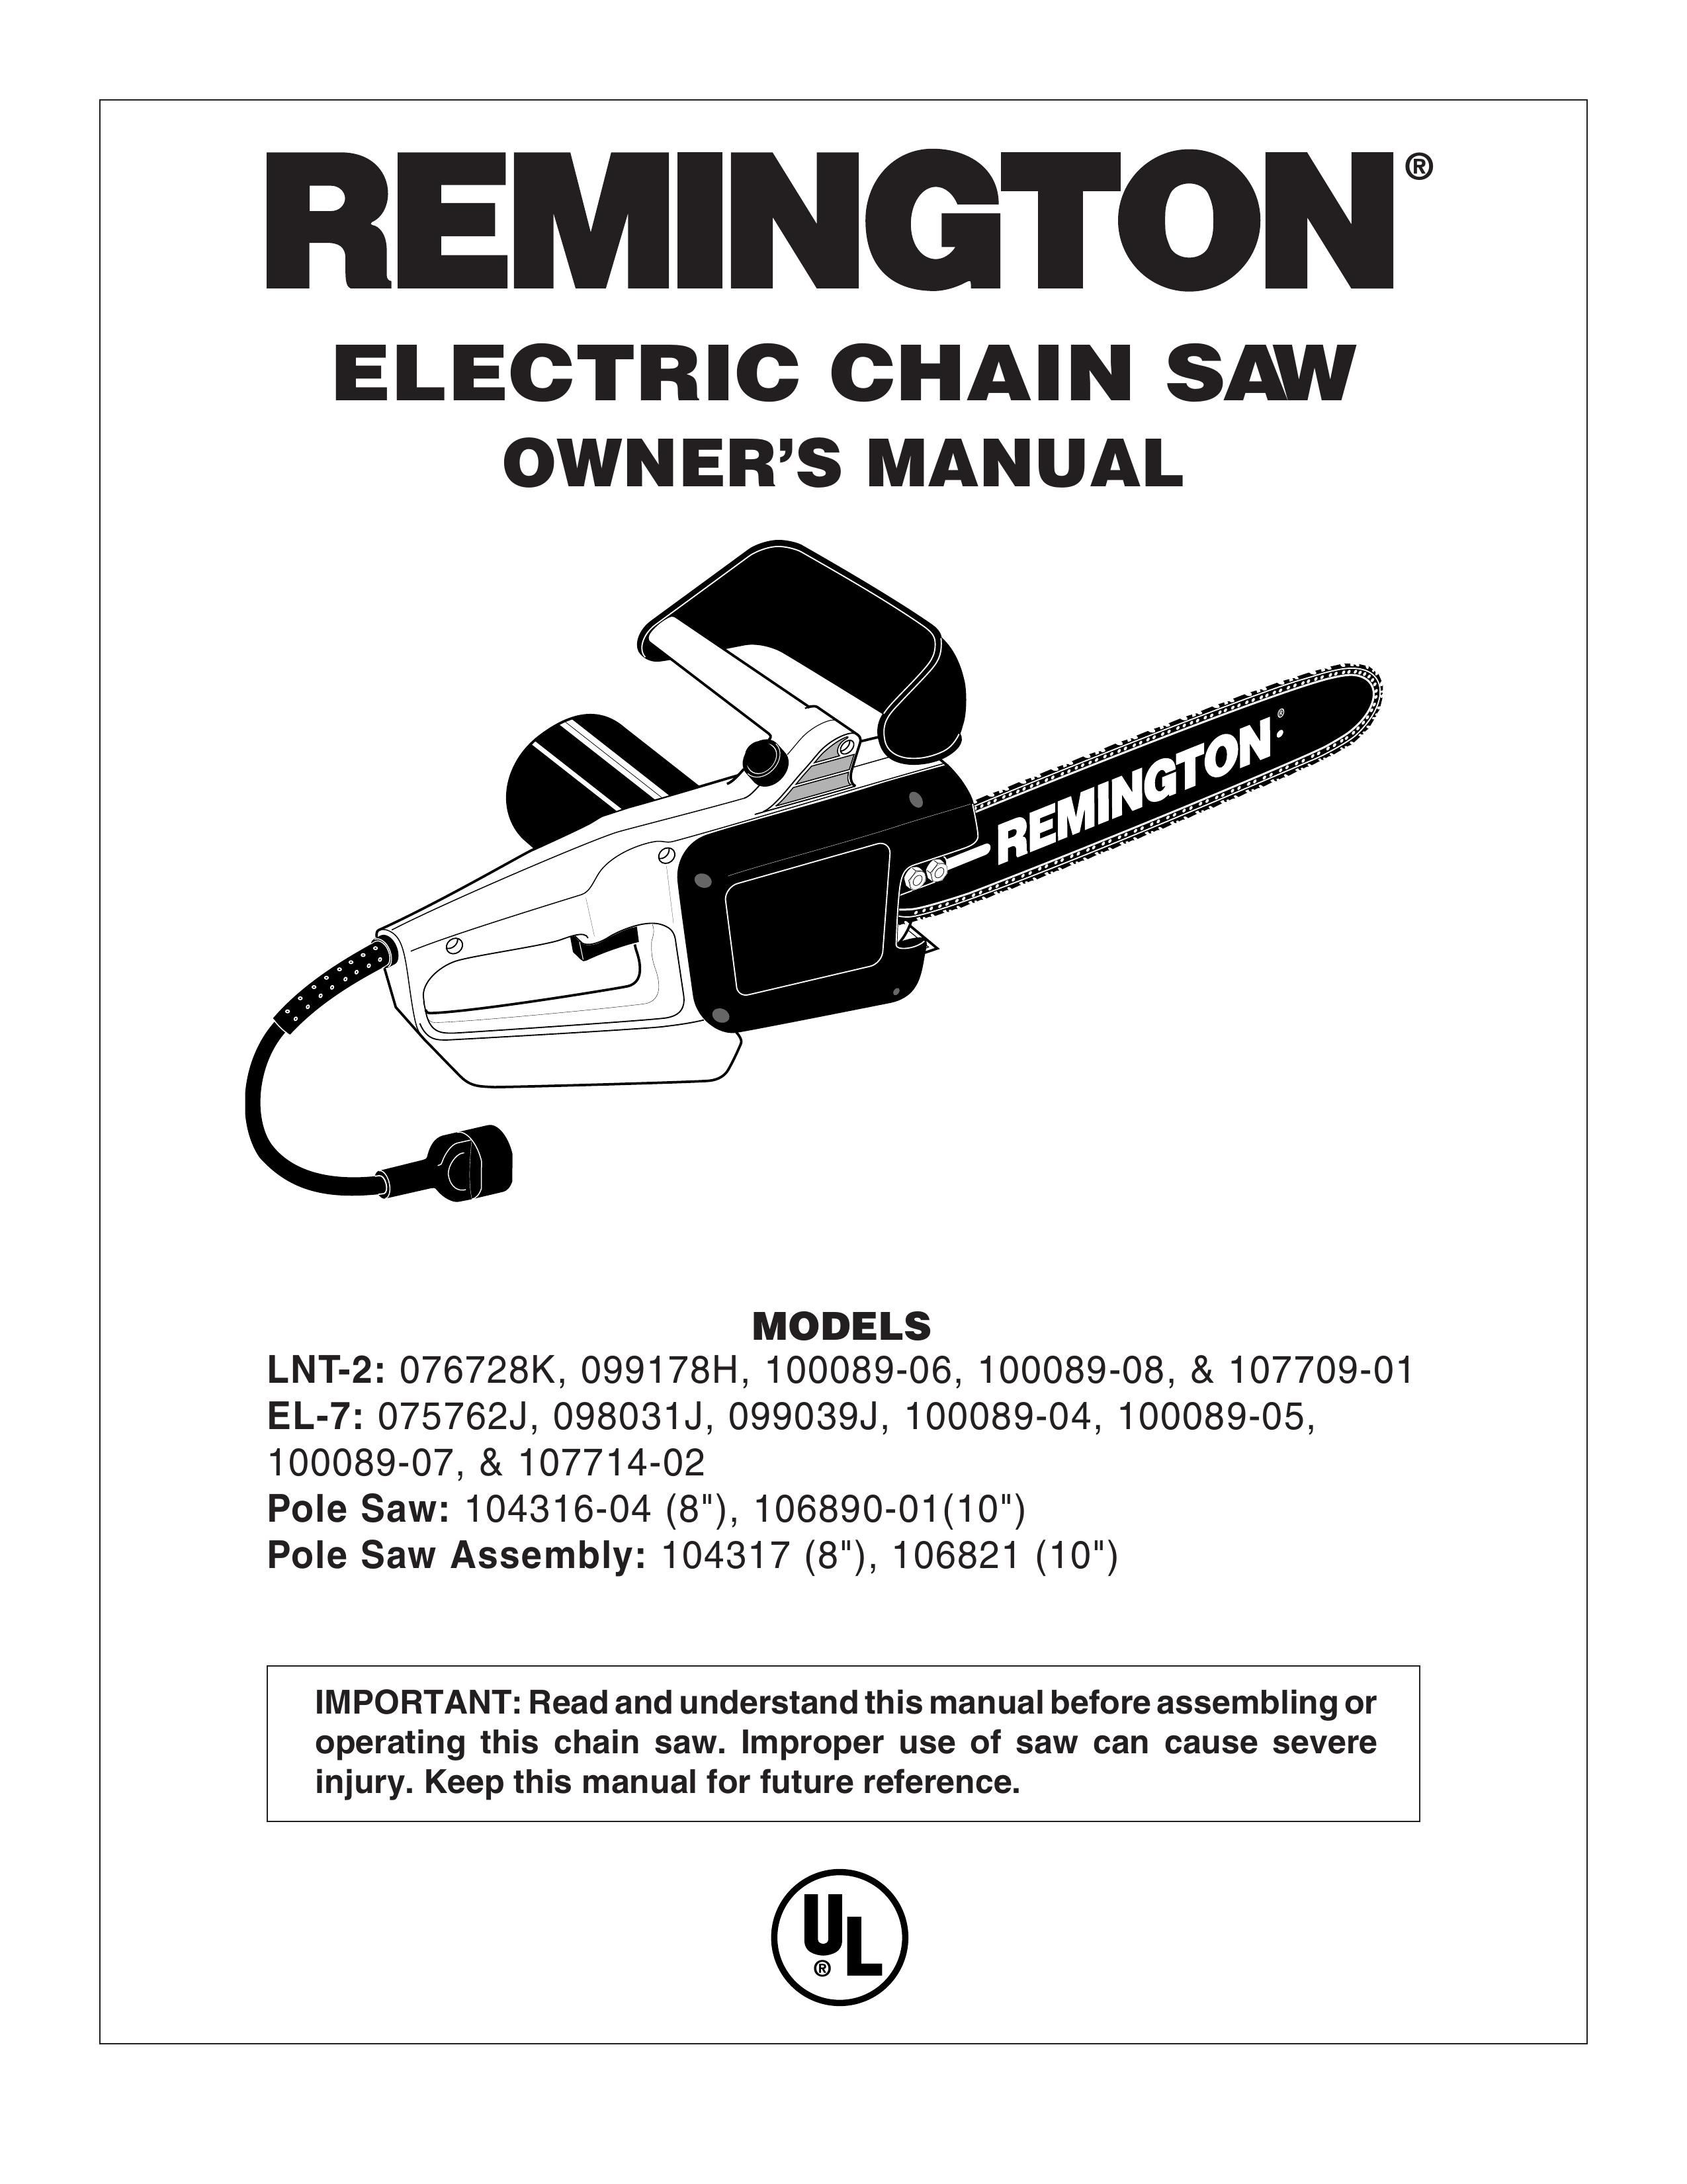 Desa EL-7 099039J Chainsaw User Manual